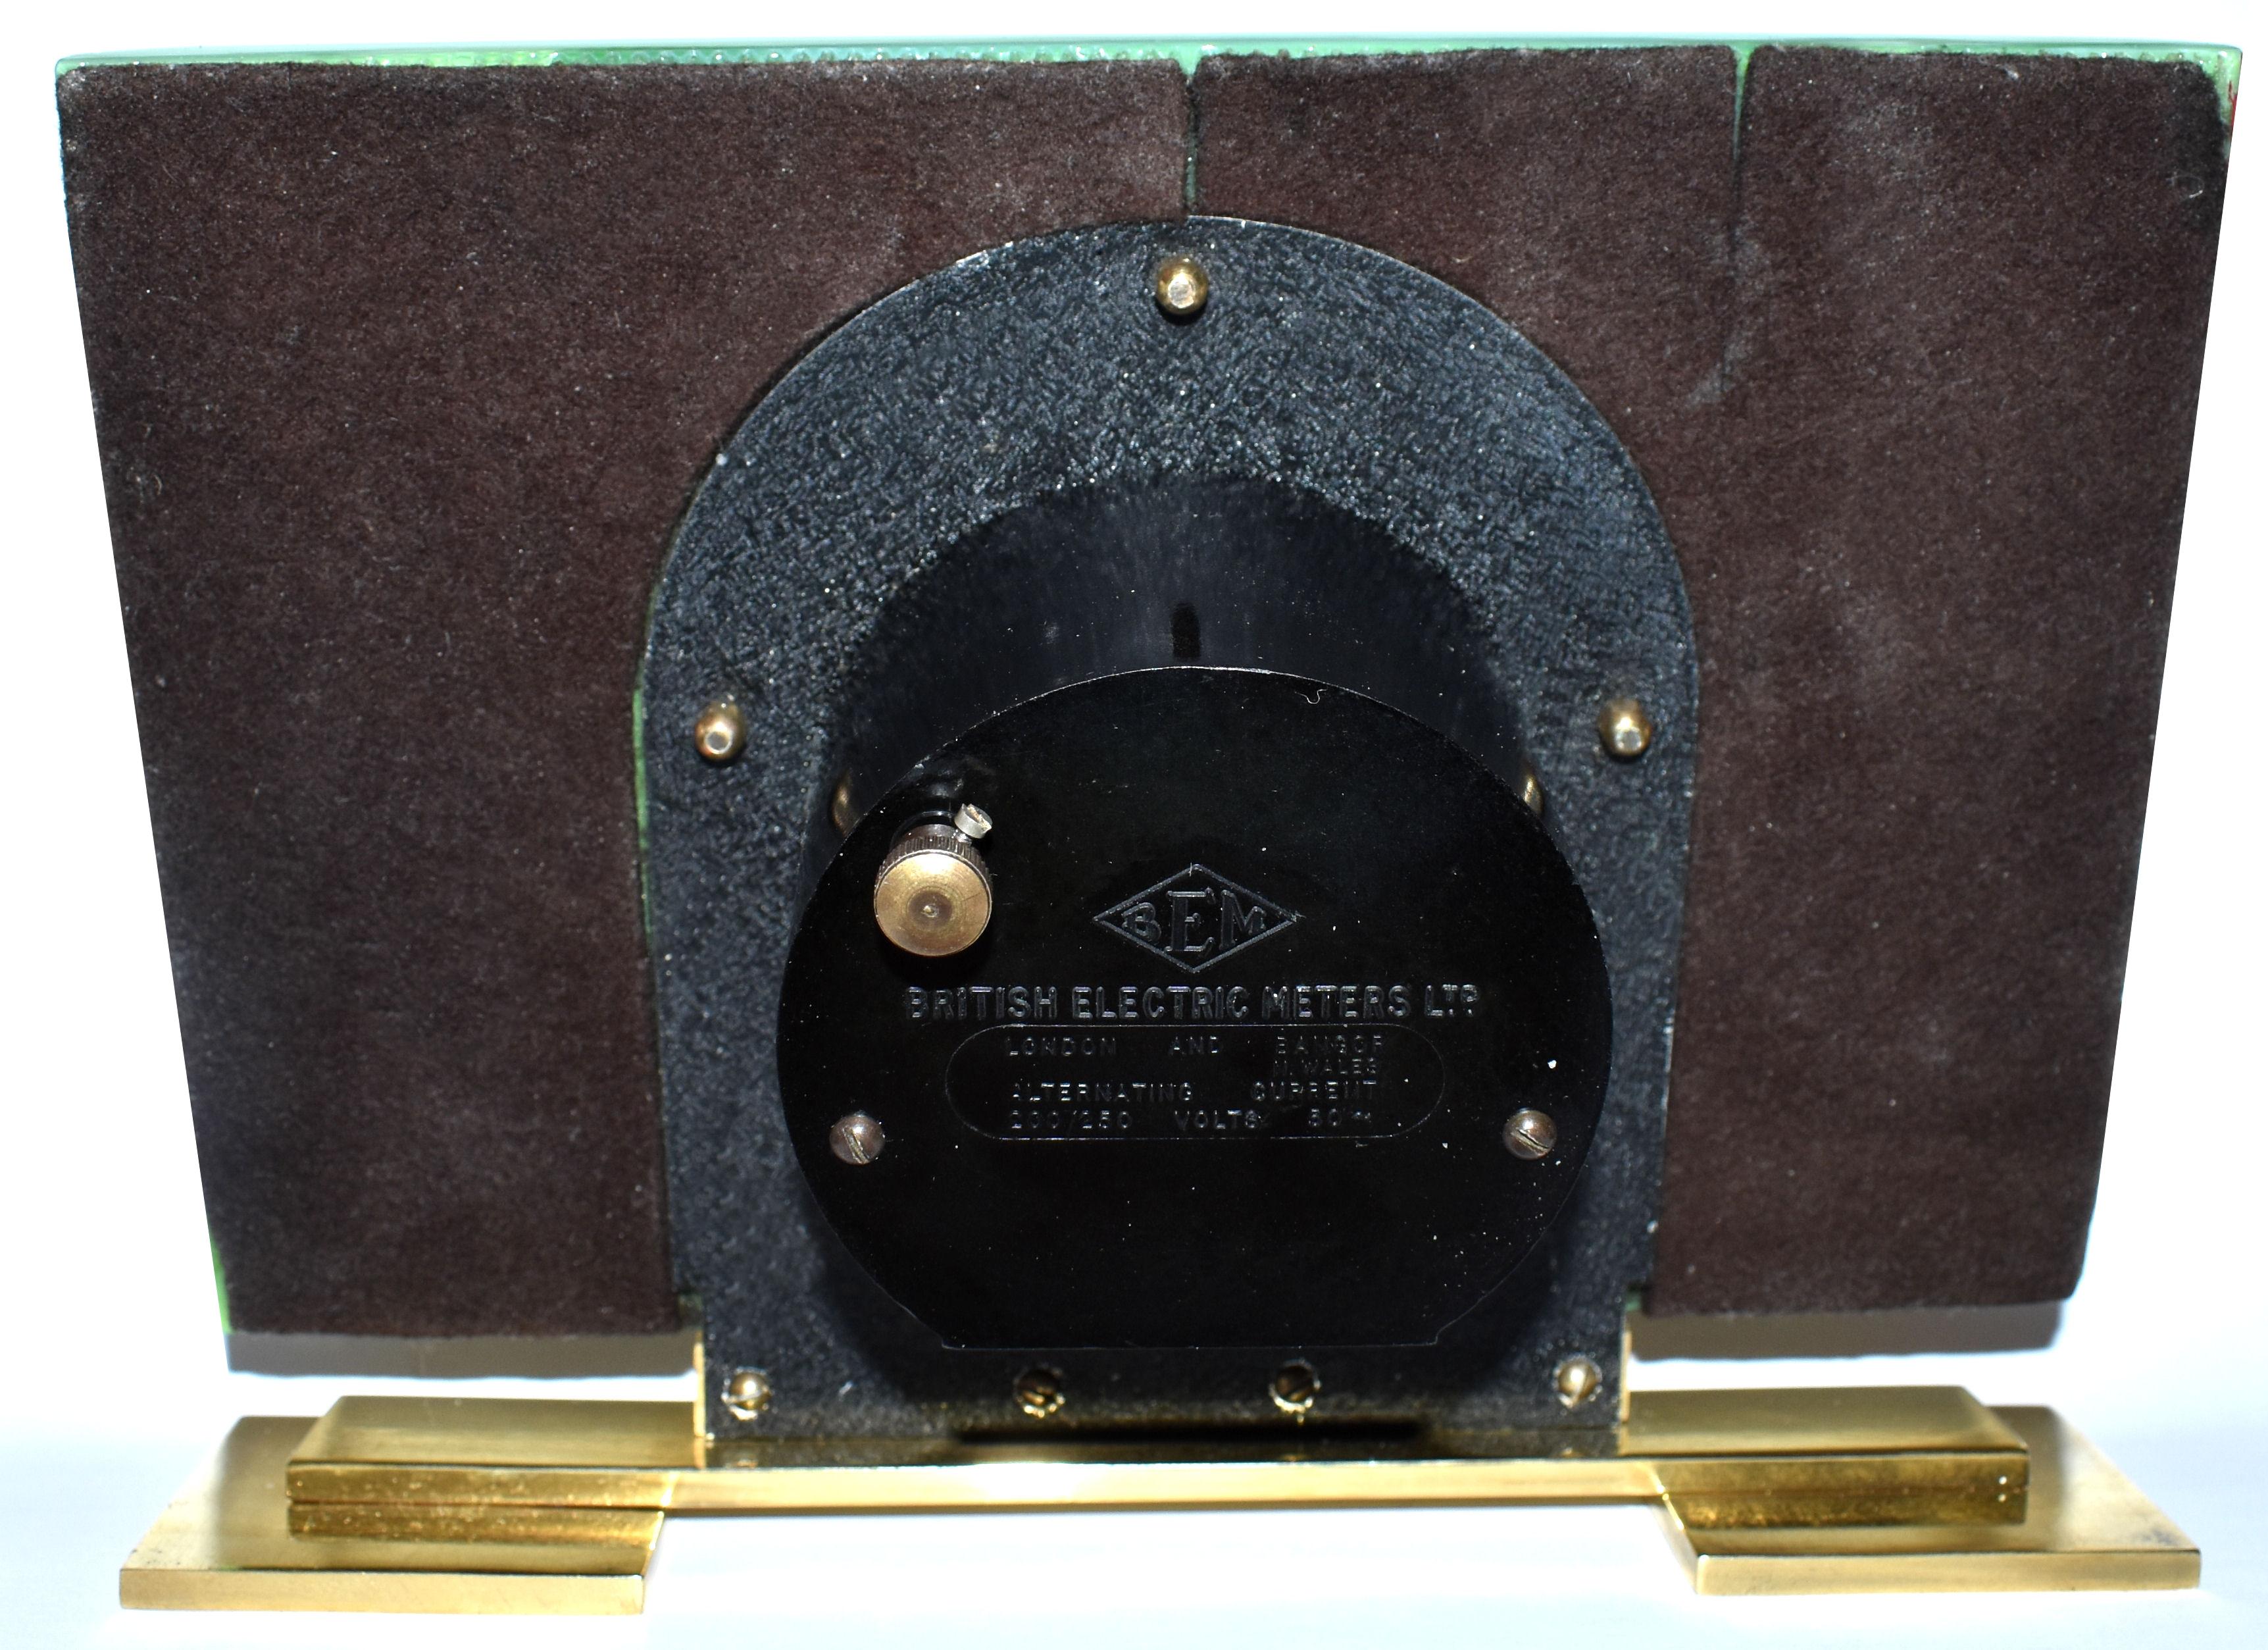 English Art Deco Green Vitrolite Mantle Clock by British Electric Meters Ltd.